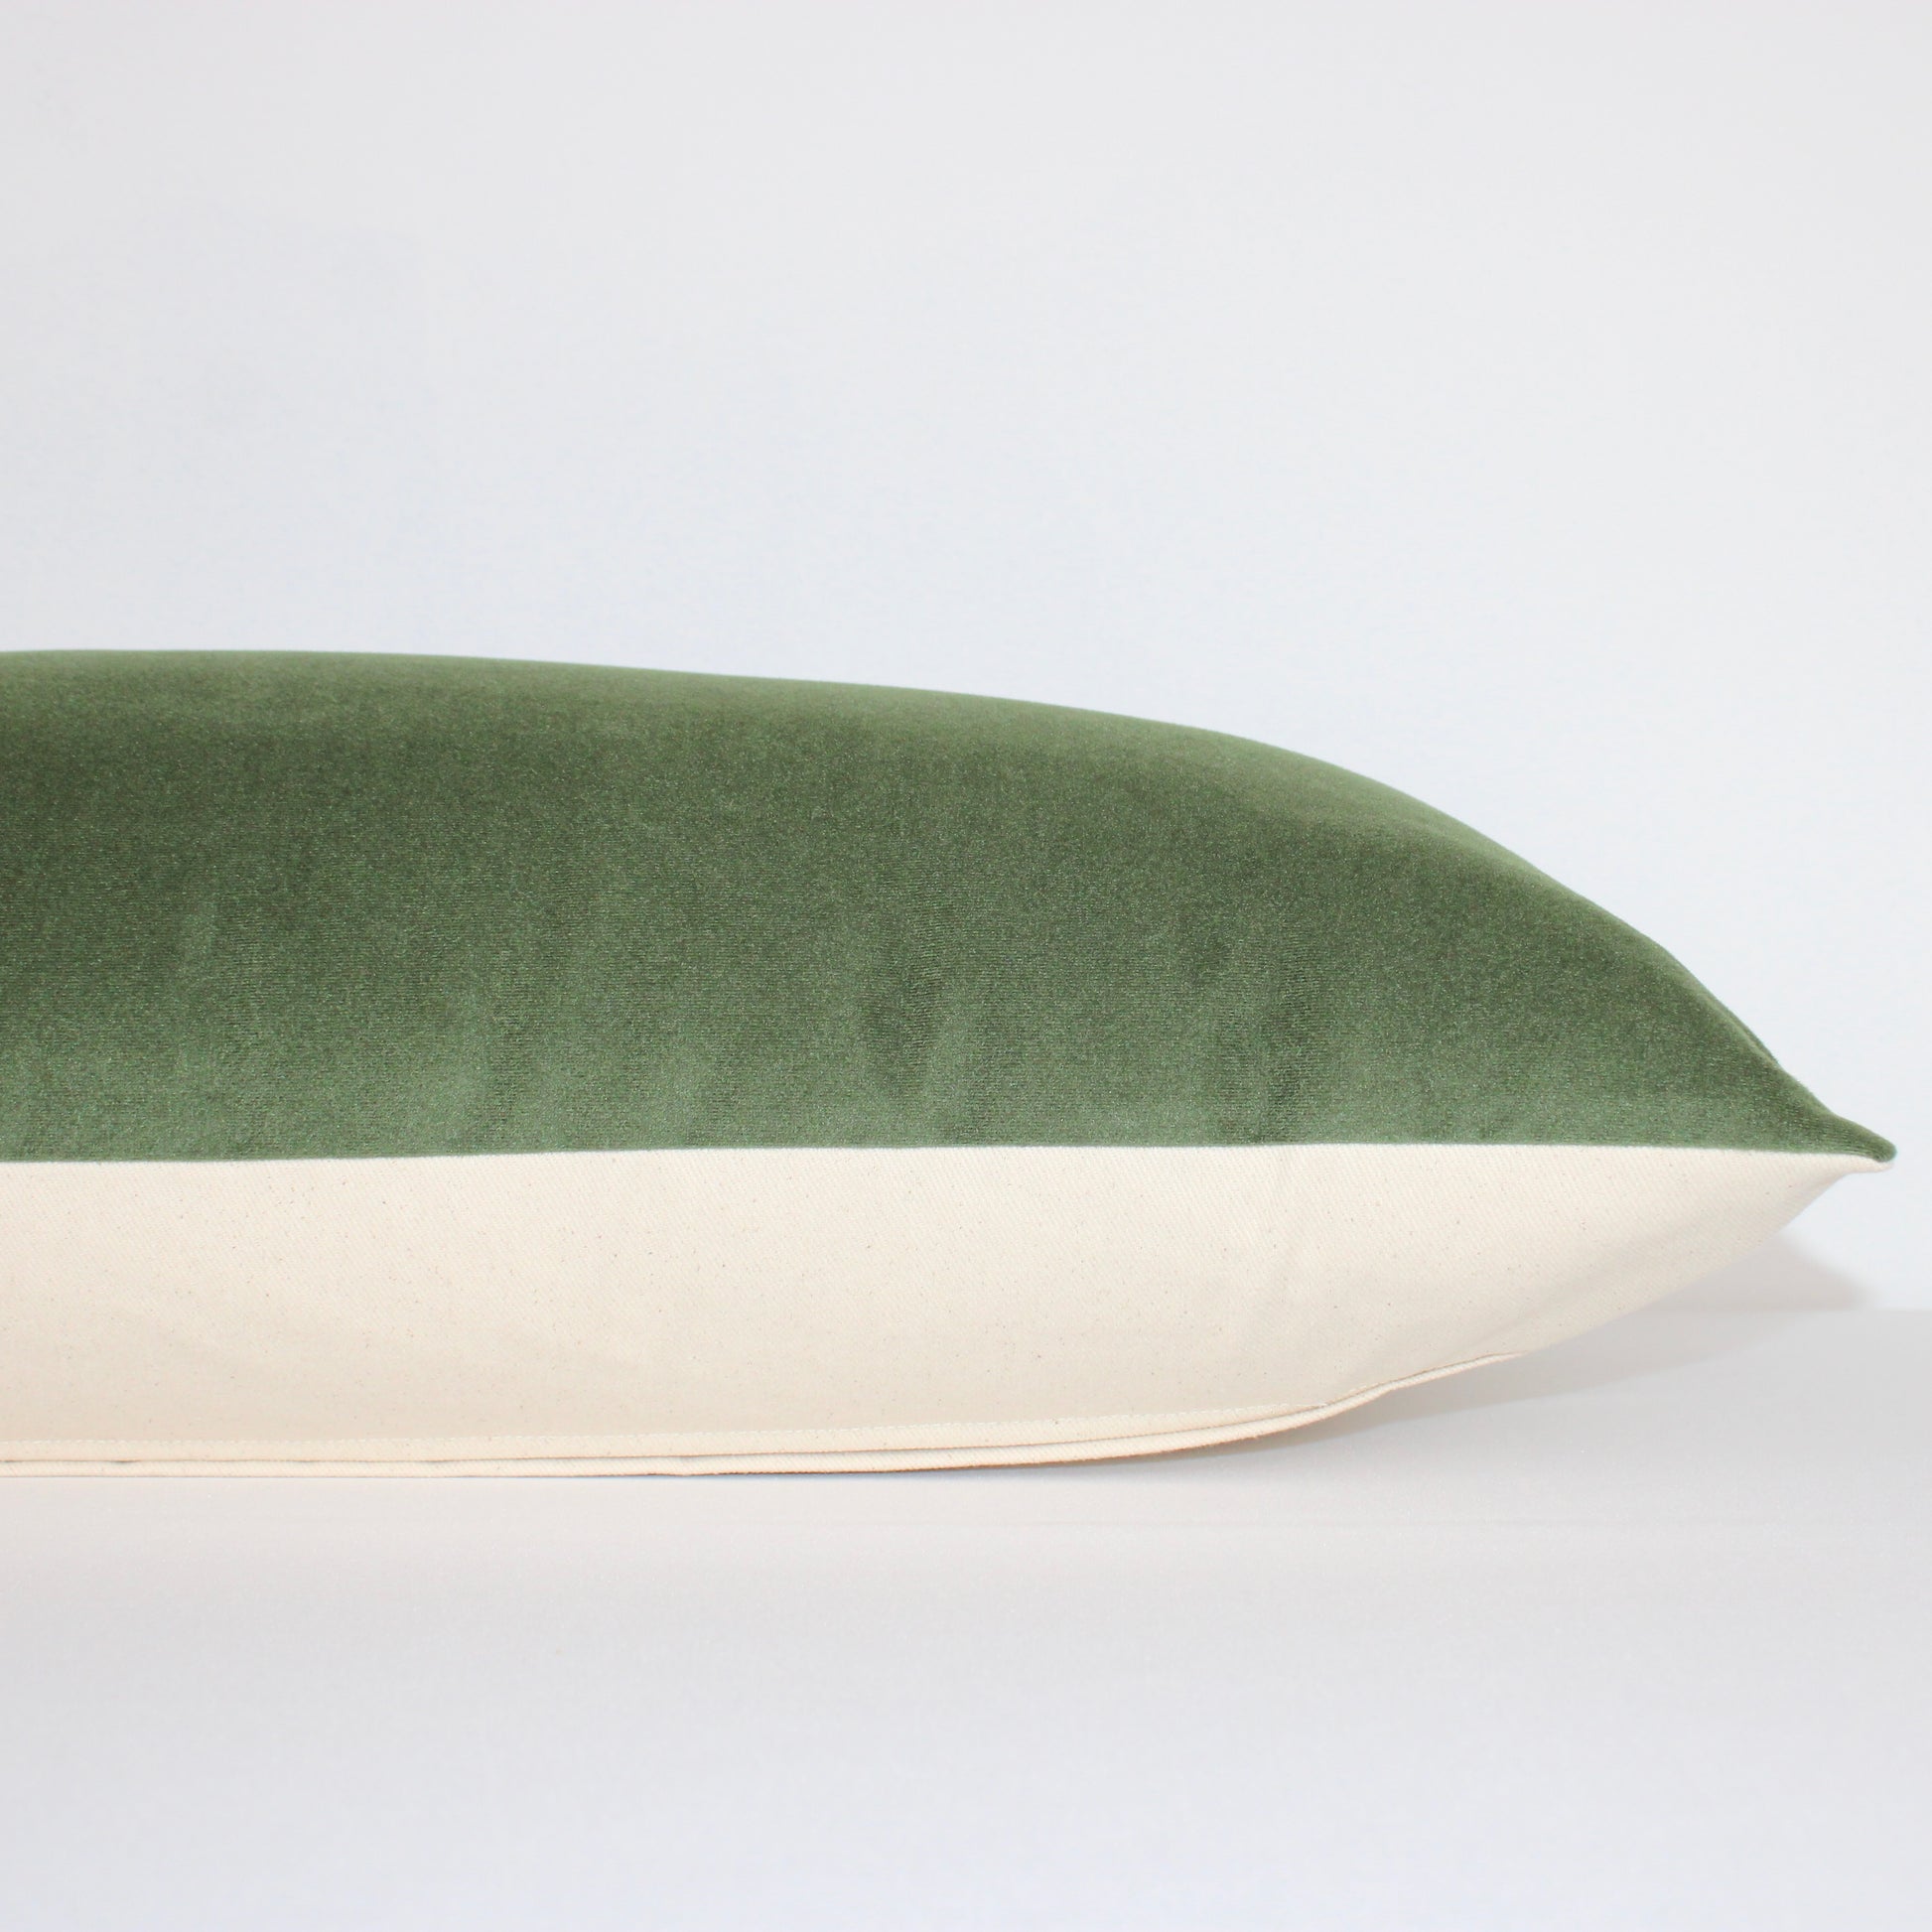 Green Velvet Extra Large Lumbar| Handwoven Pillows